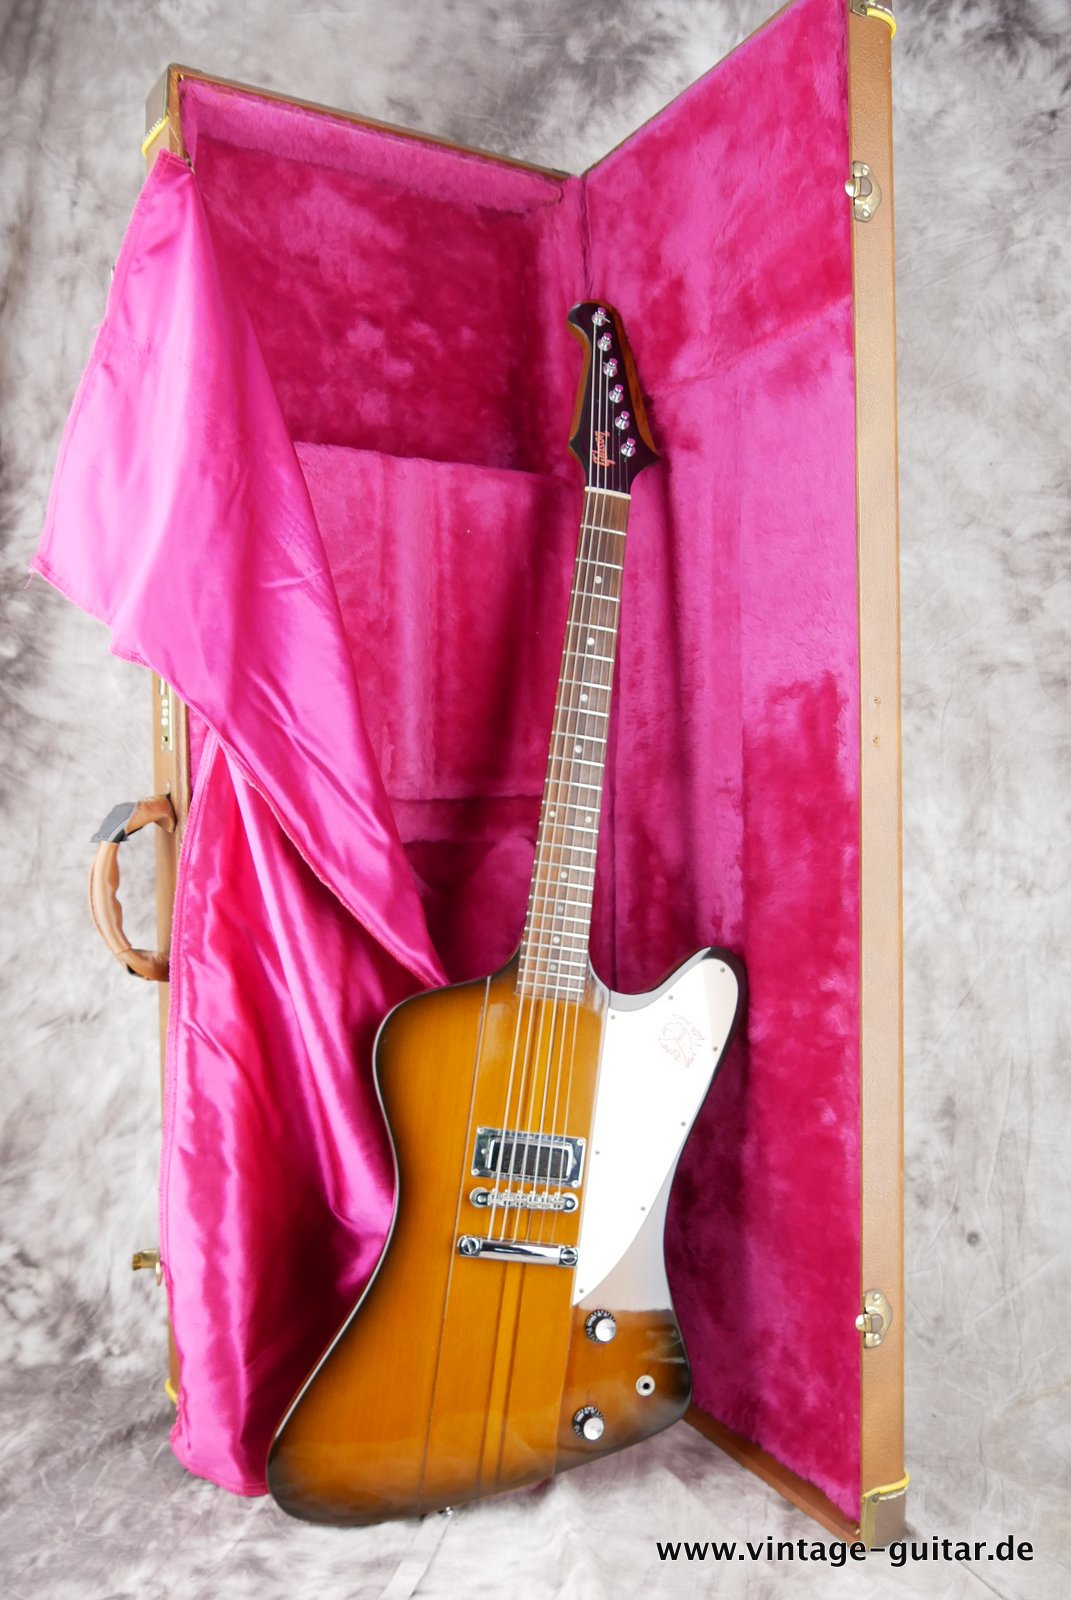 img/vintage/4772/Gibson-Firebird-I-1991-limited-edition-custom-shop-023.JPG